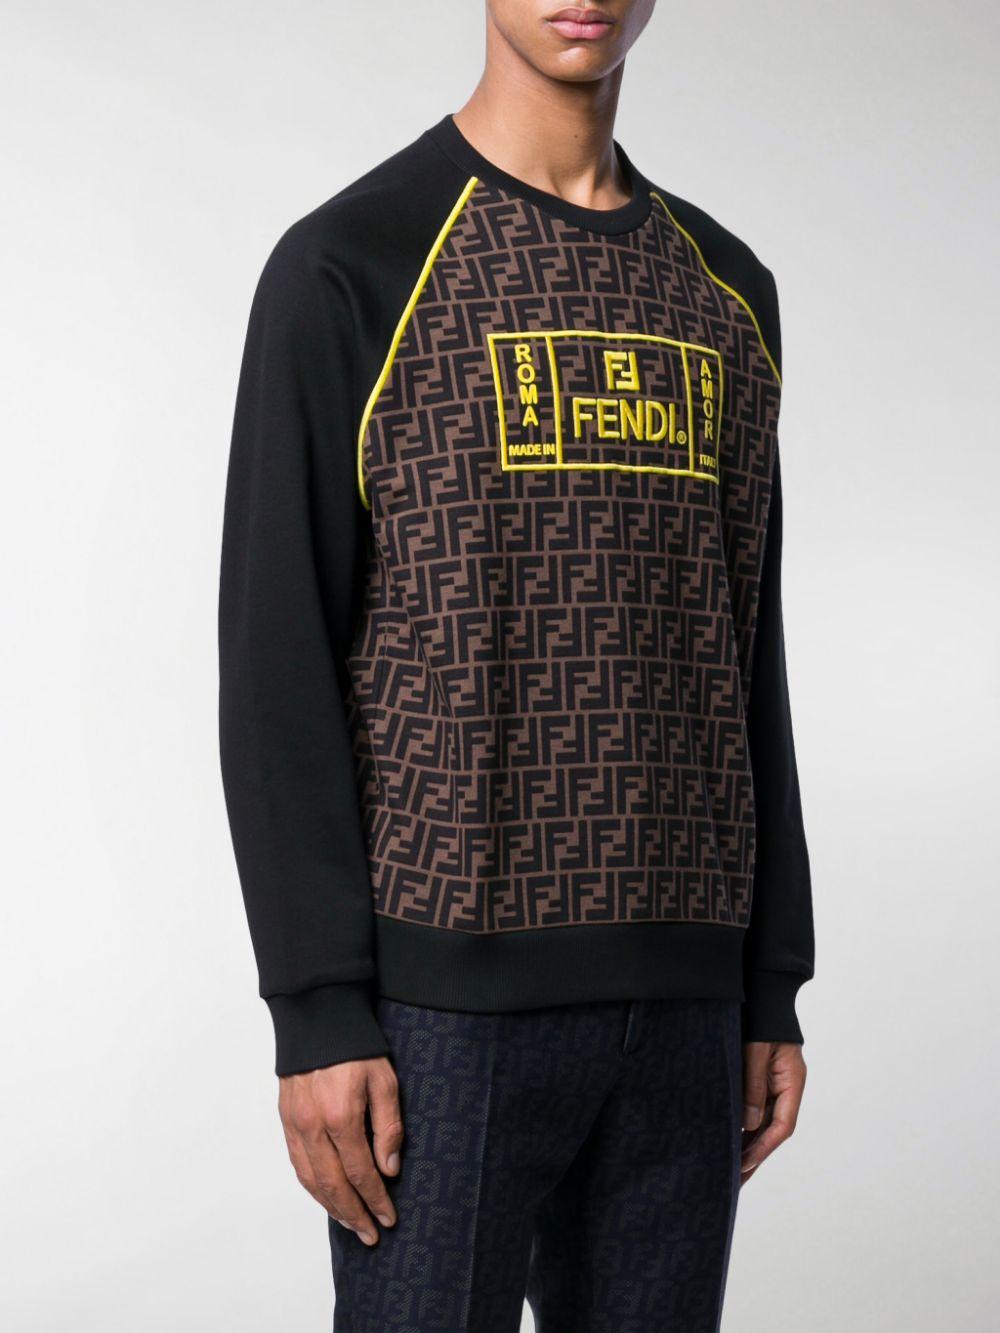 Fendi Cotton Ff Monogram Sweatshirt in Black for Men - Lyst